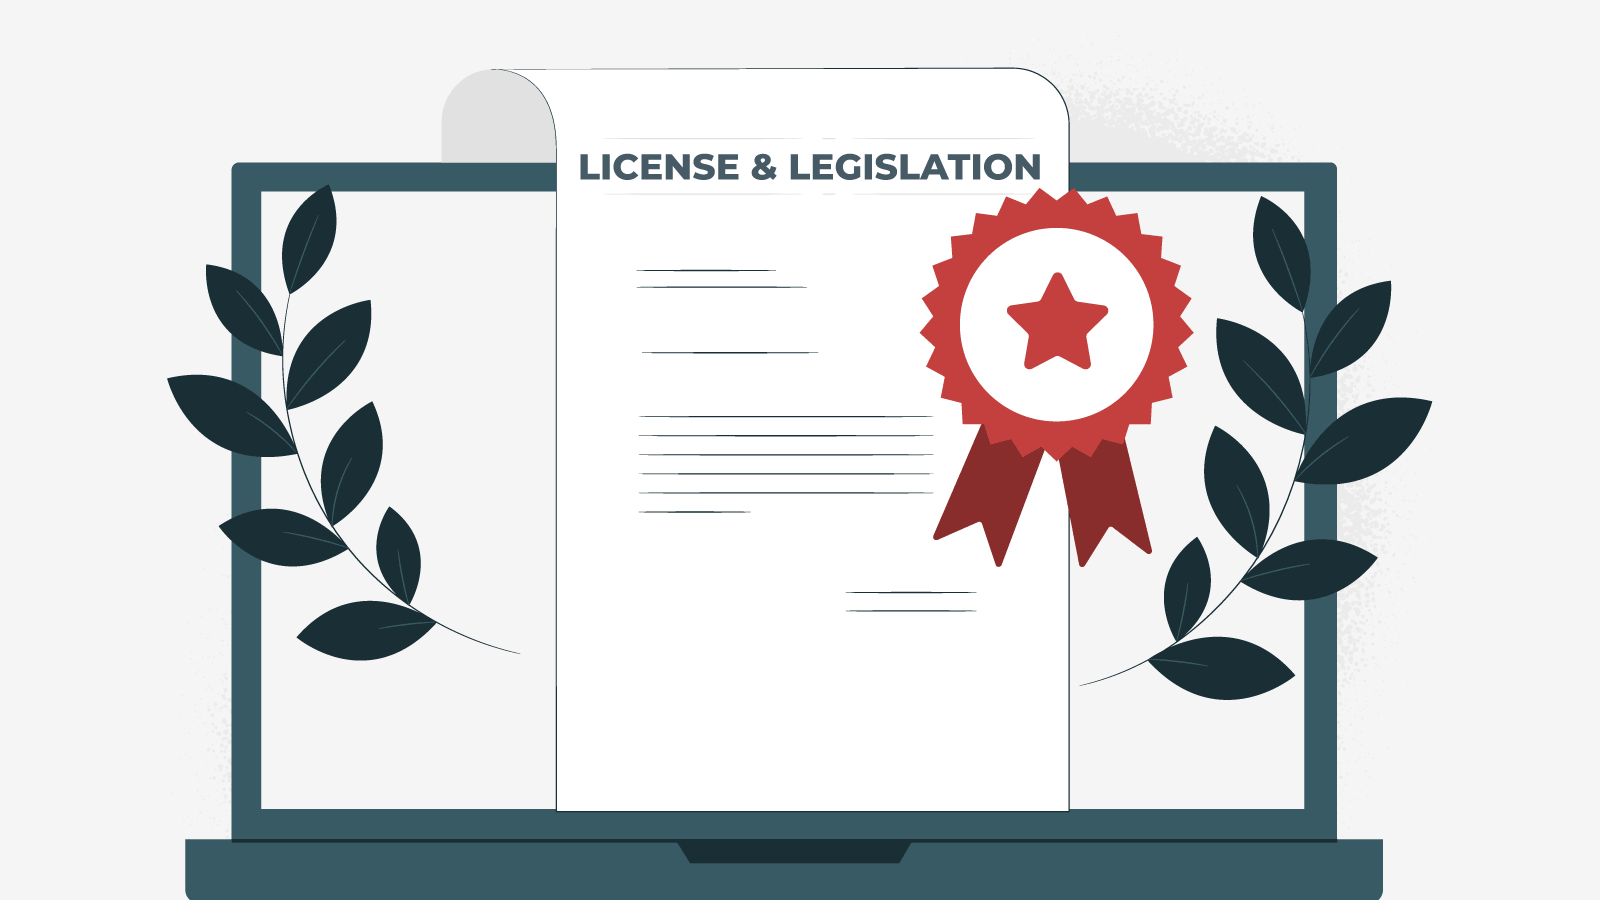 License & Legislation